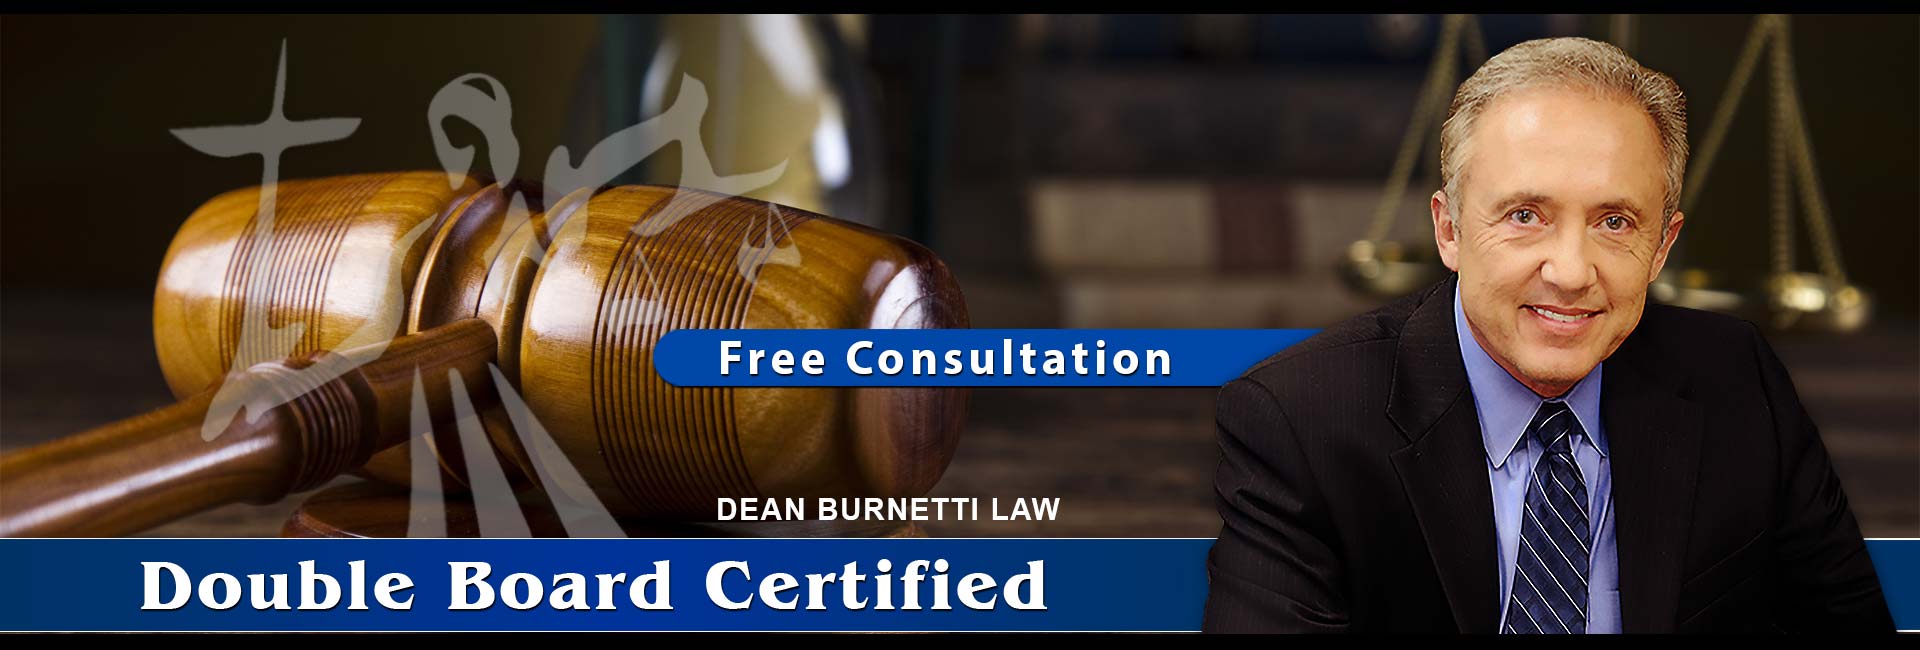 Dean Burnetti Law